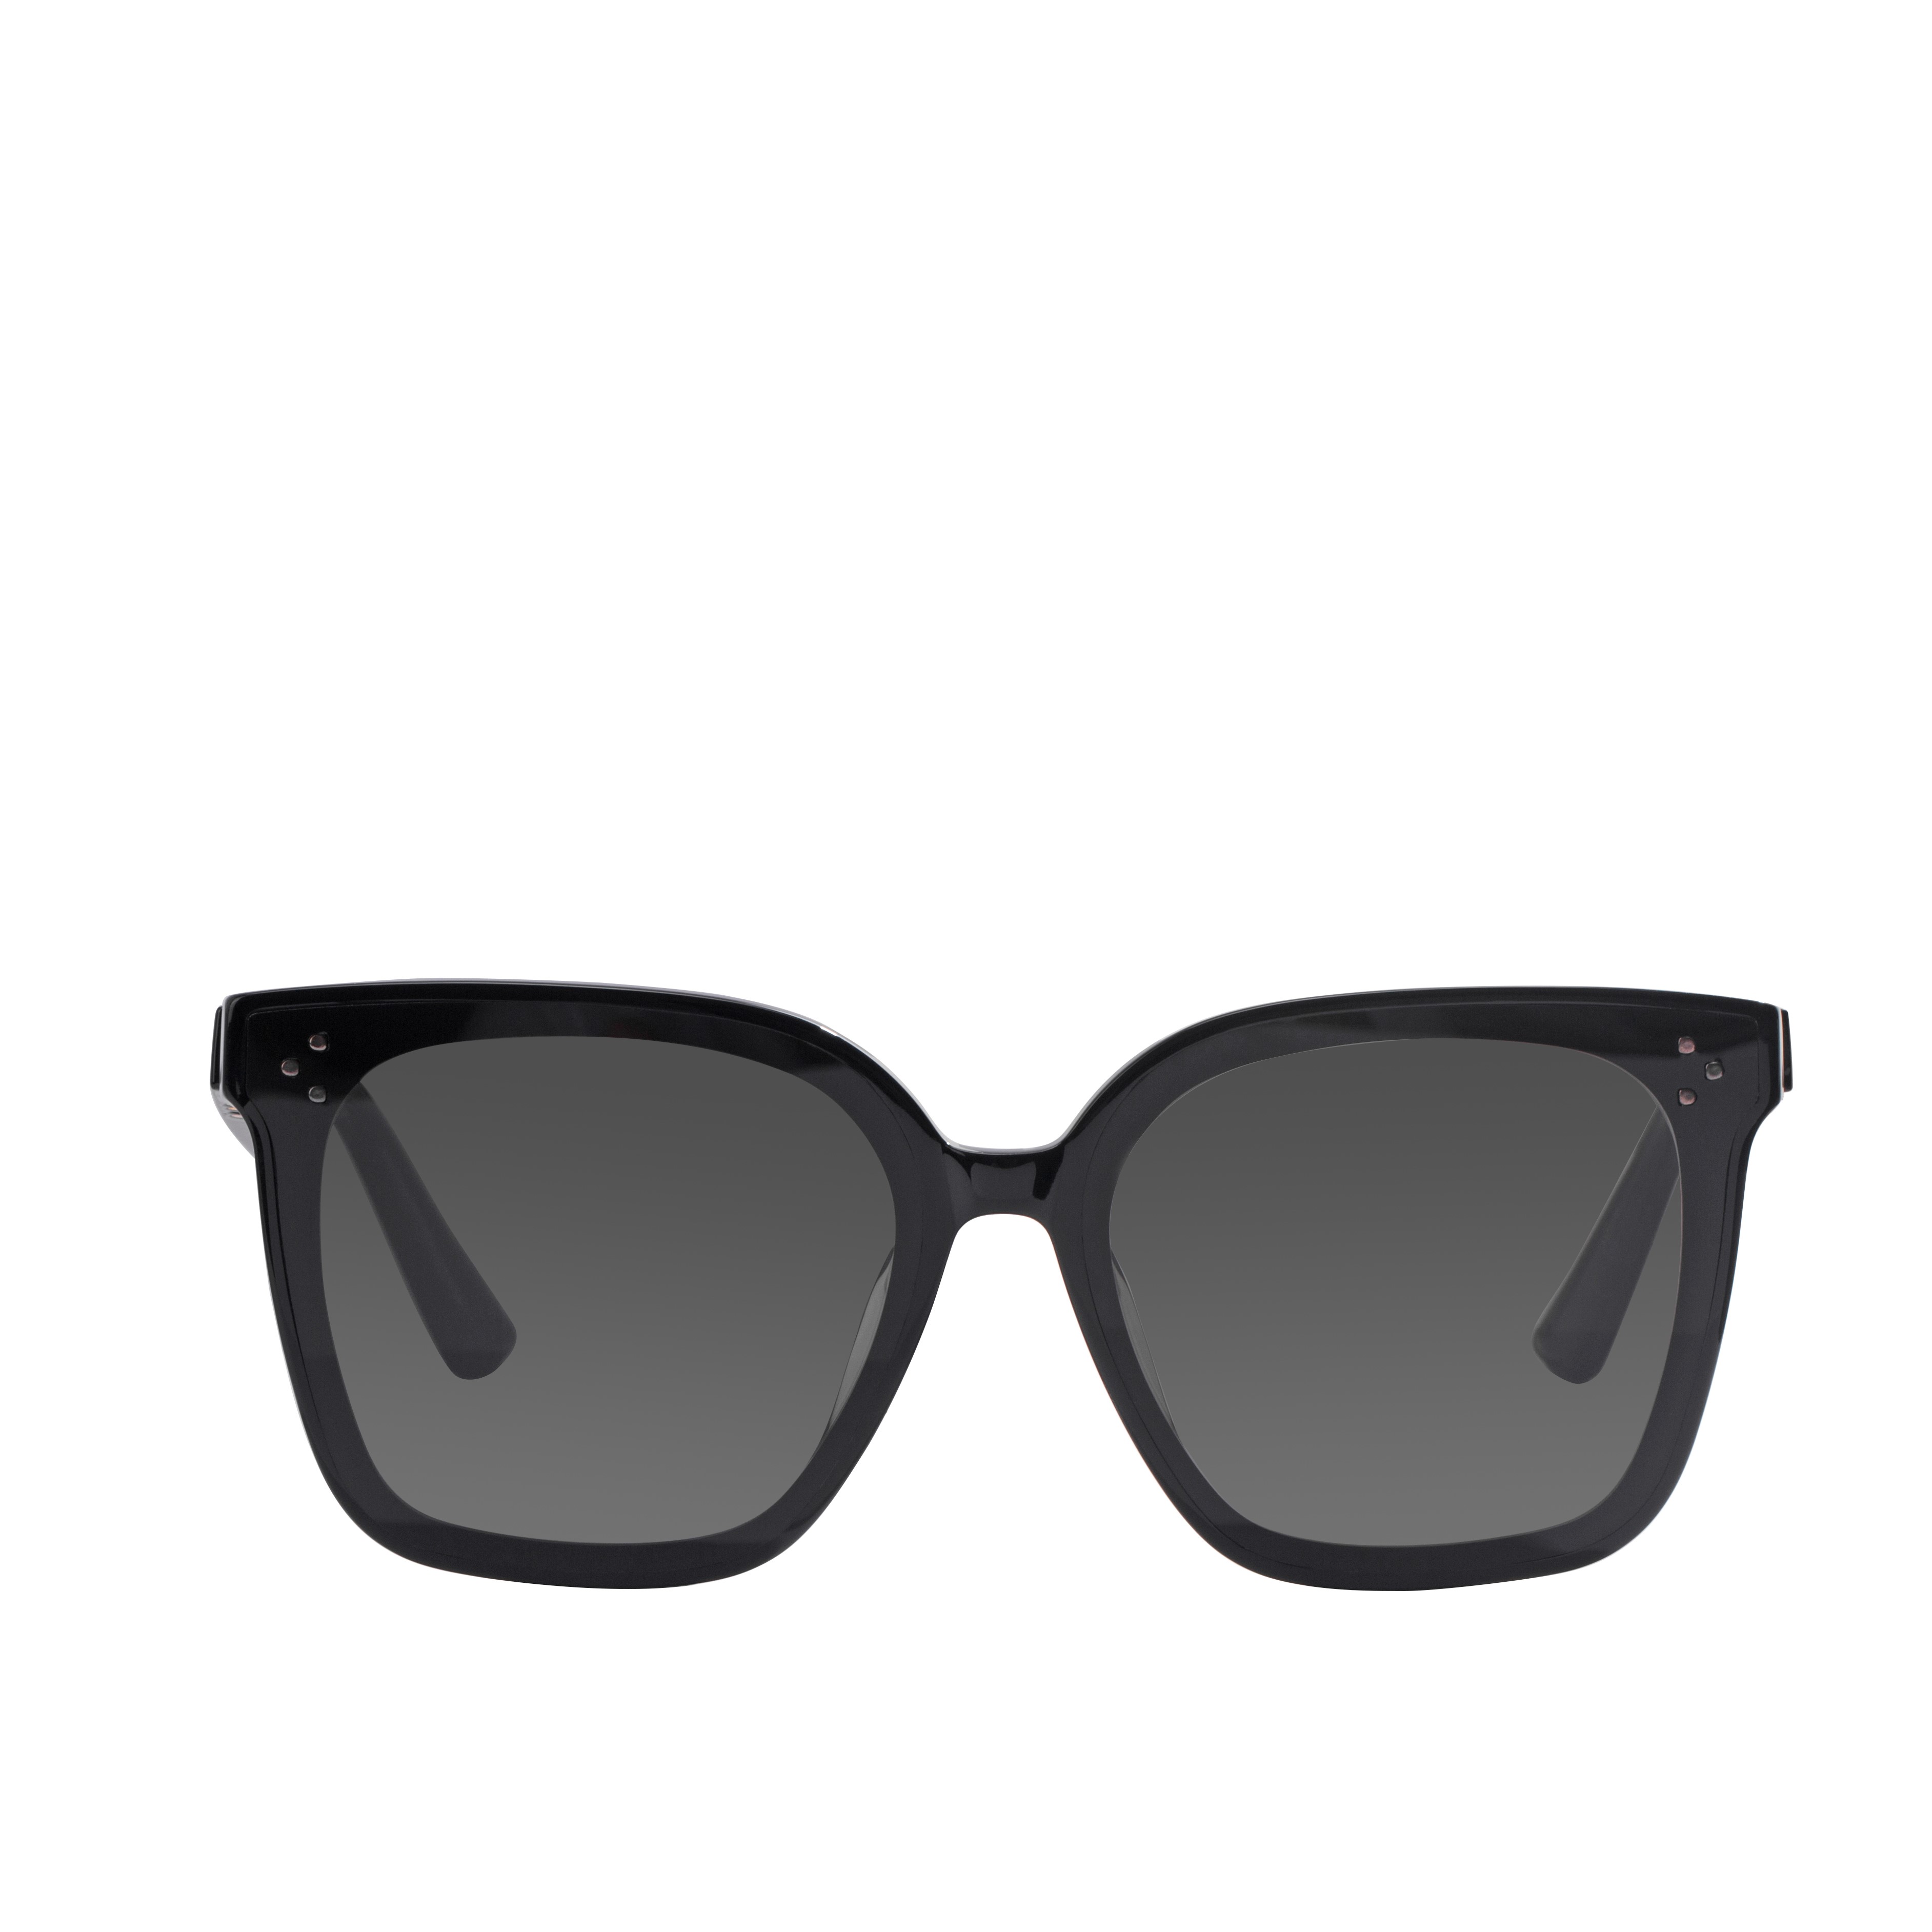 Ultra light intelligent Bluetooth eyeglass frame for class, work, paddling and fishing wireless driving Sunglasses mens nearsightedness frame